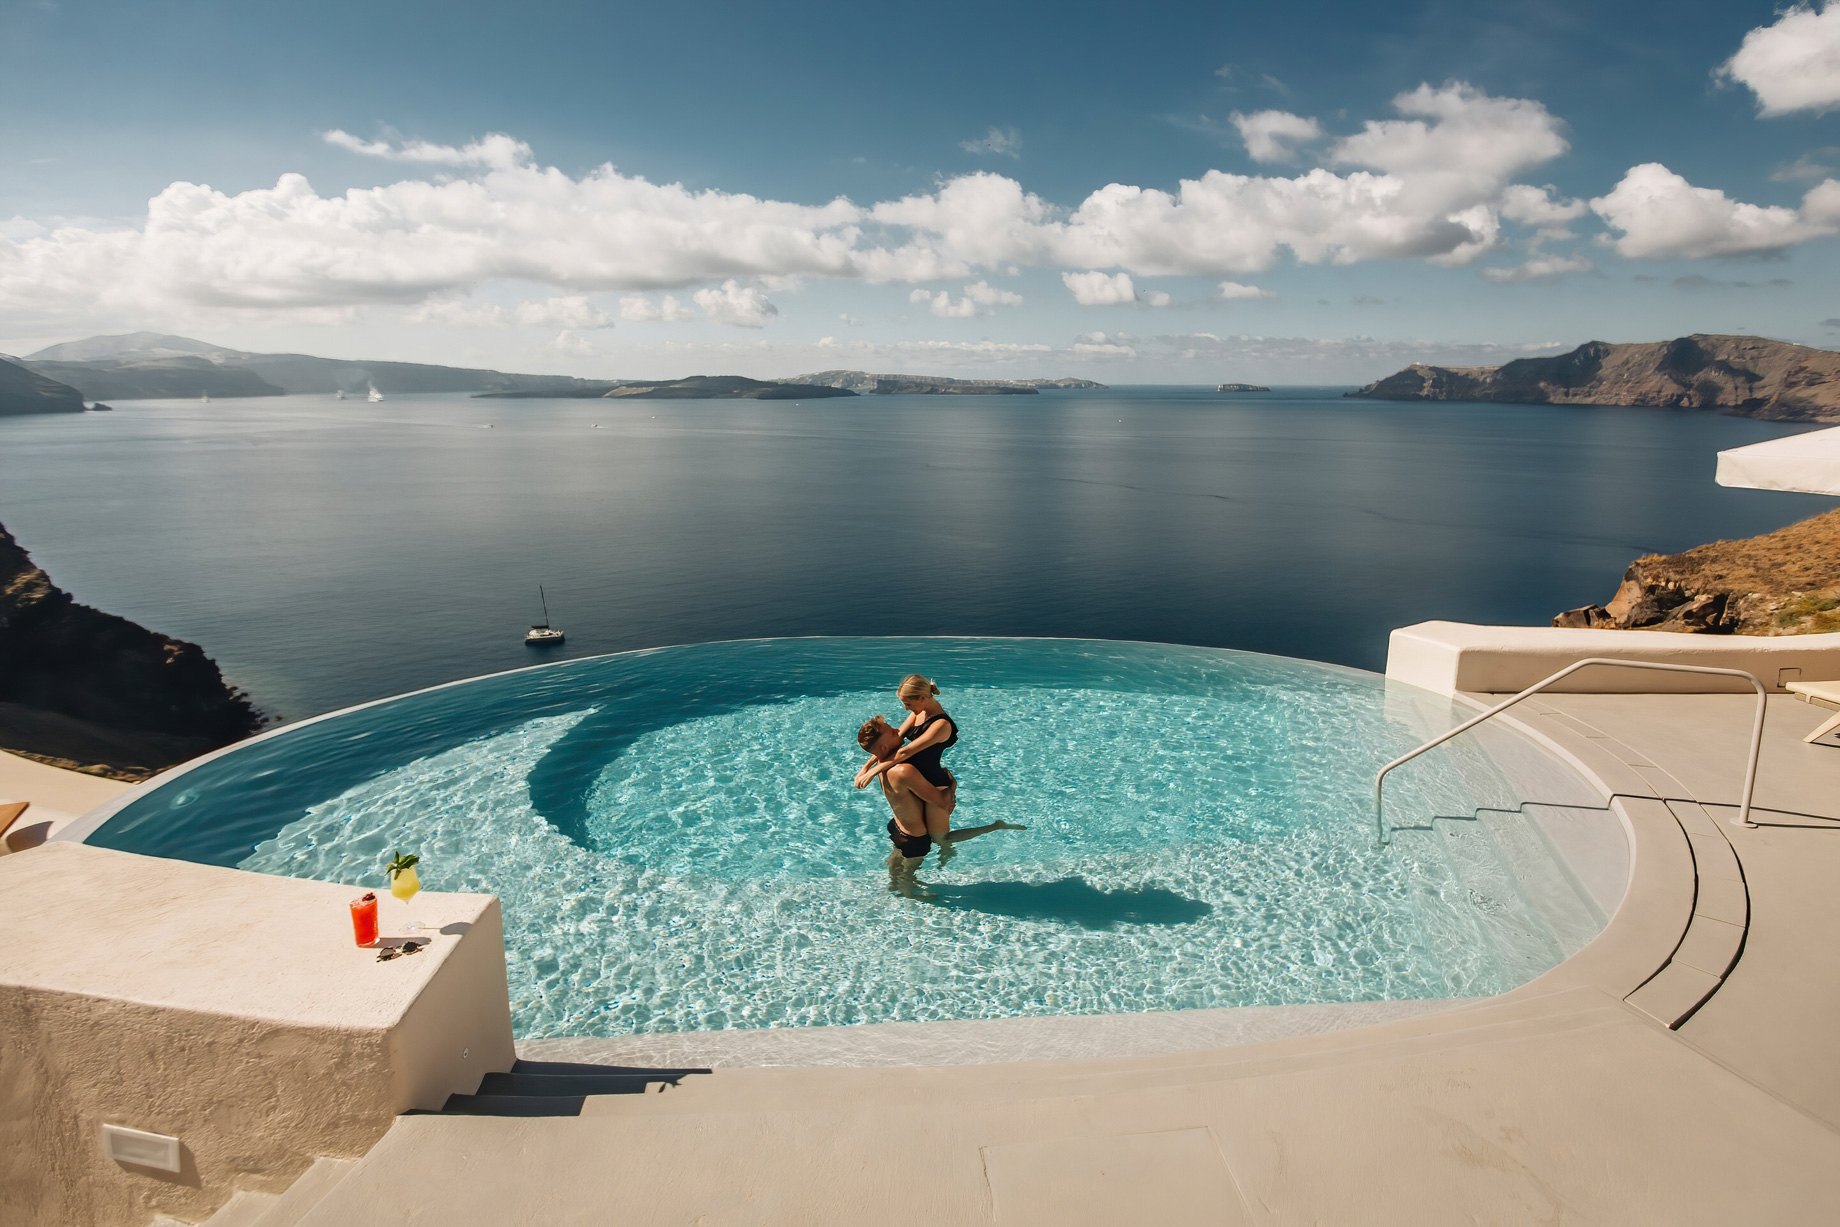 Mystique Hotel Santorini – Oia, Santorini Island, Greece – Main Infinity Pool